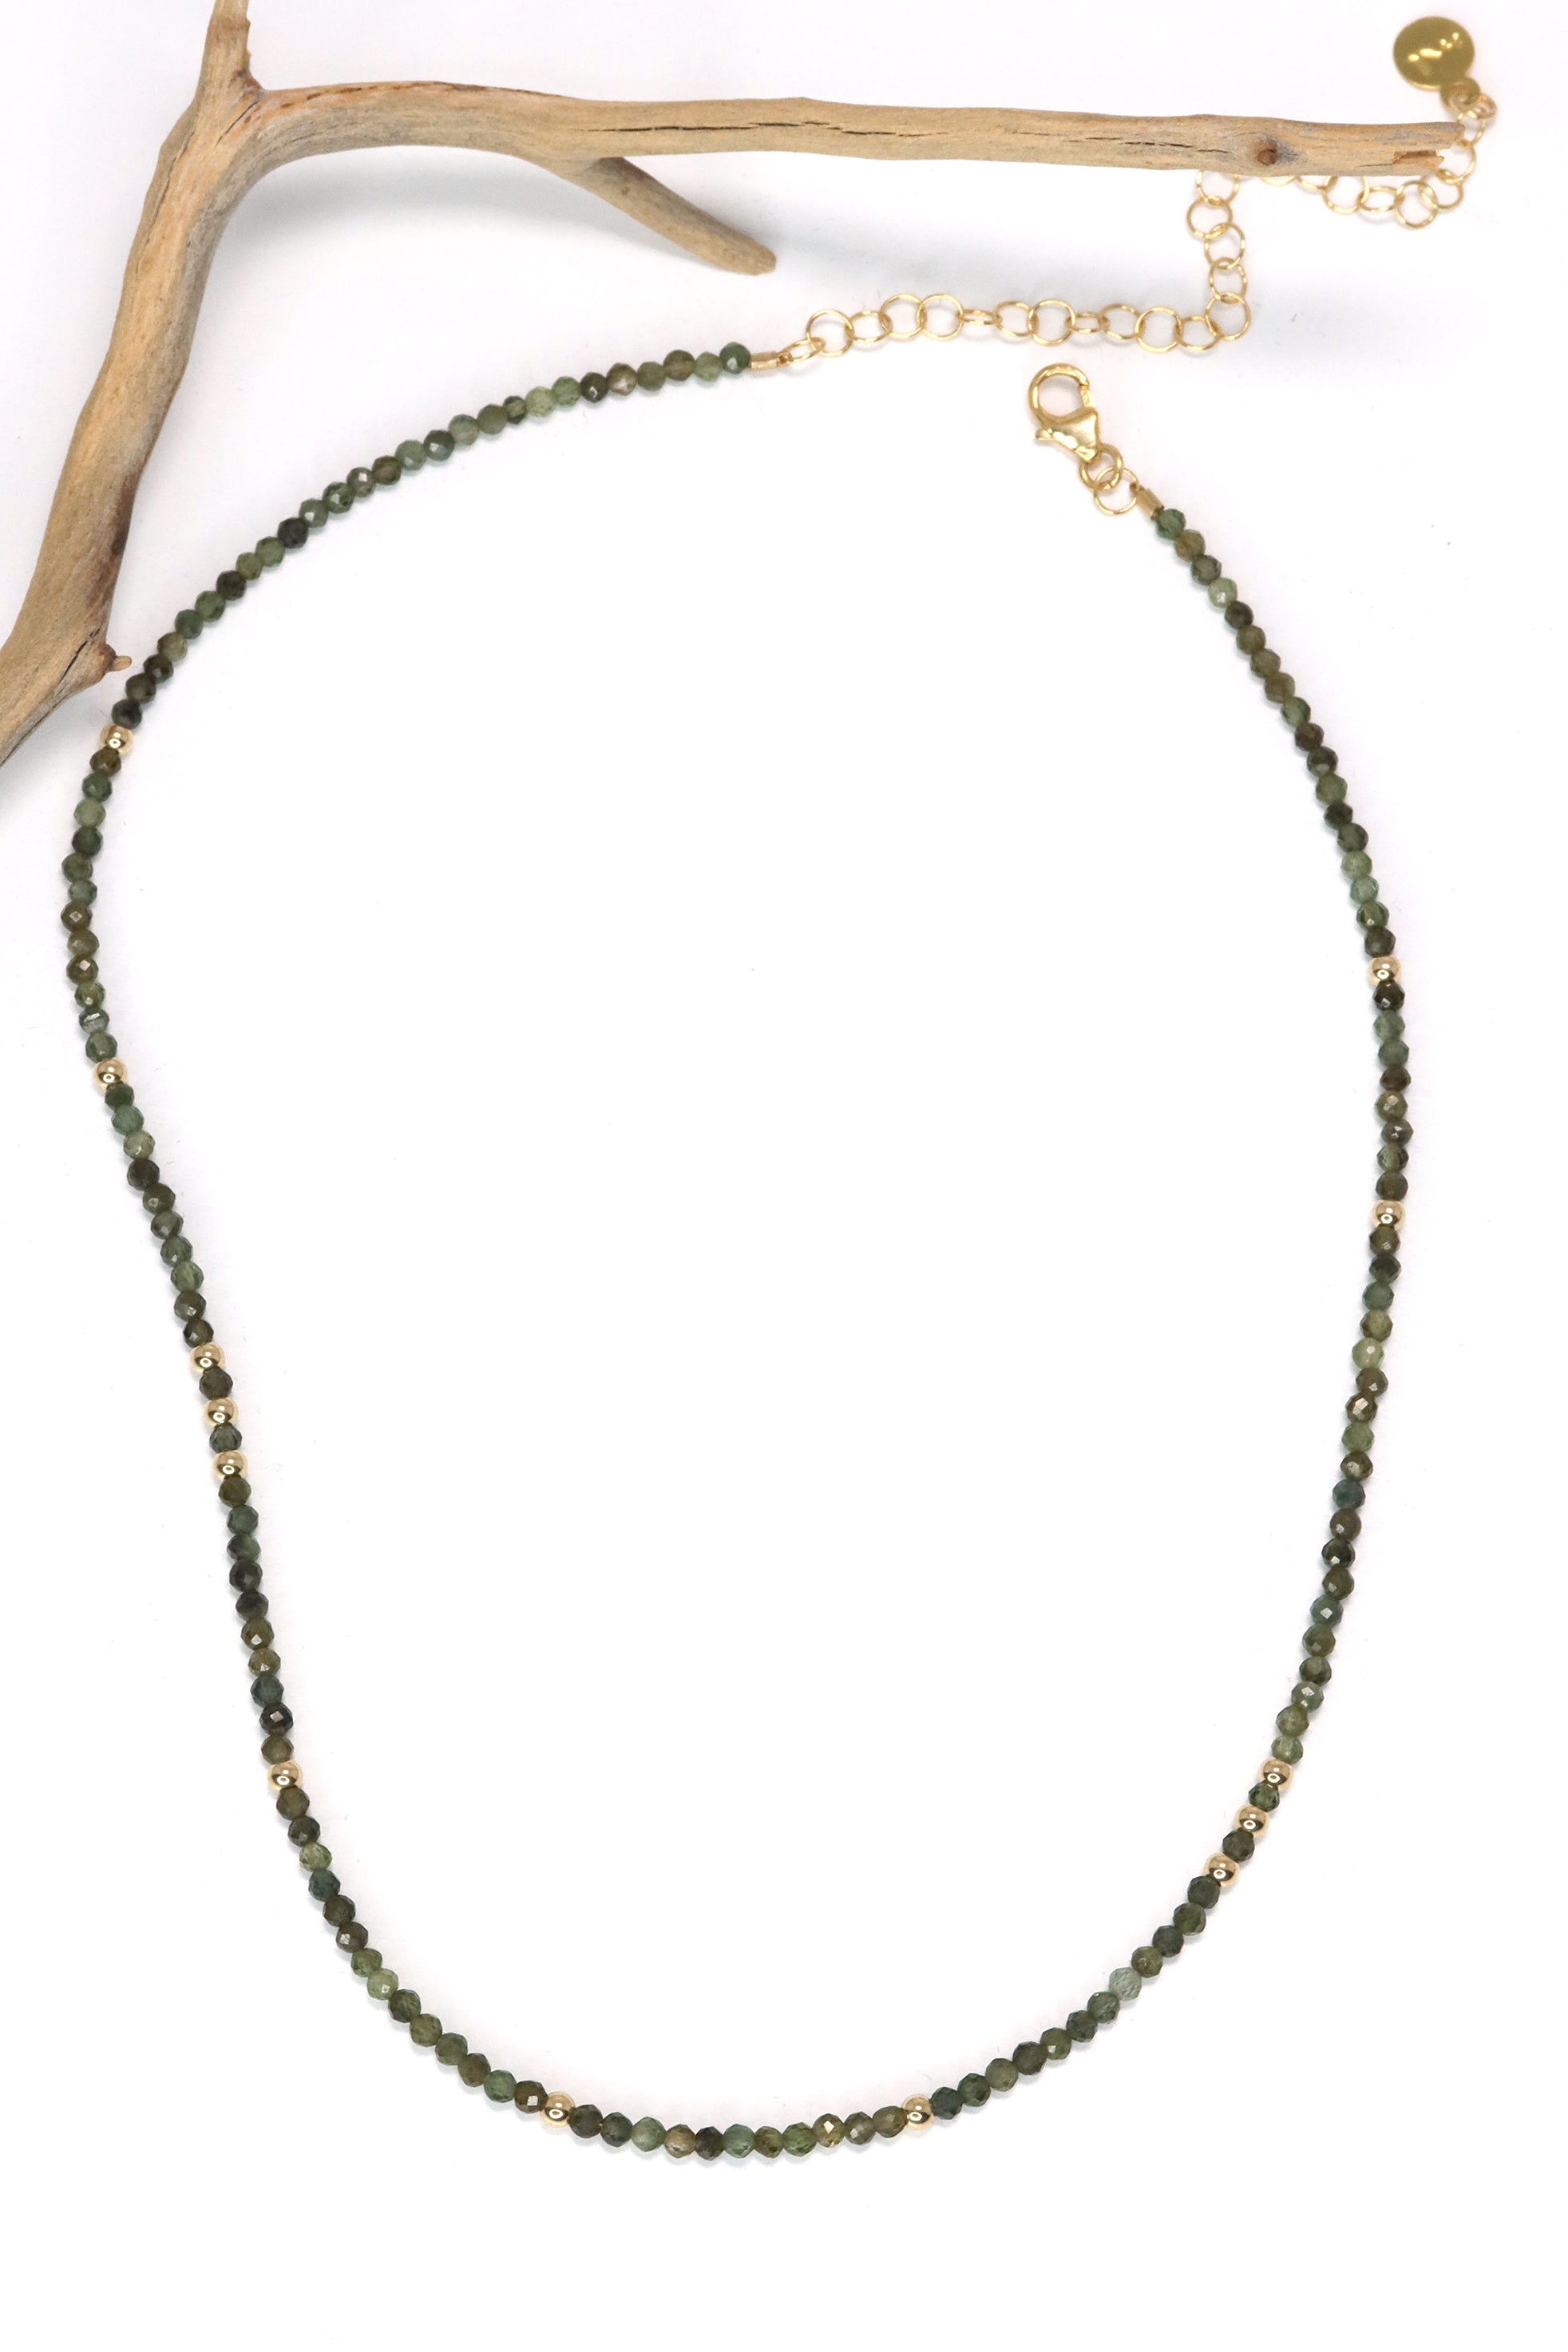 Green Tourmaline Charis Necklace